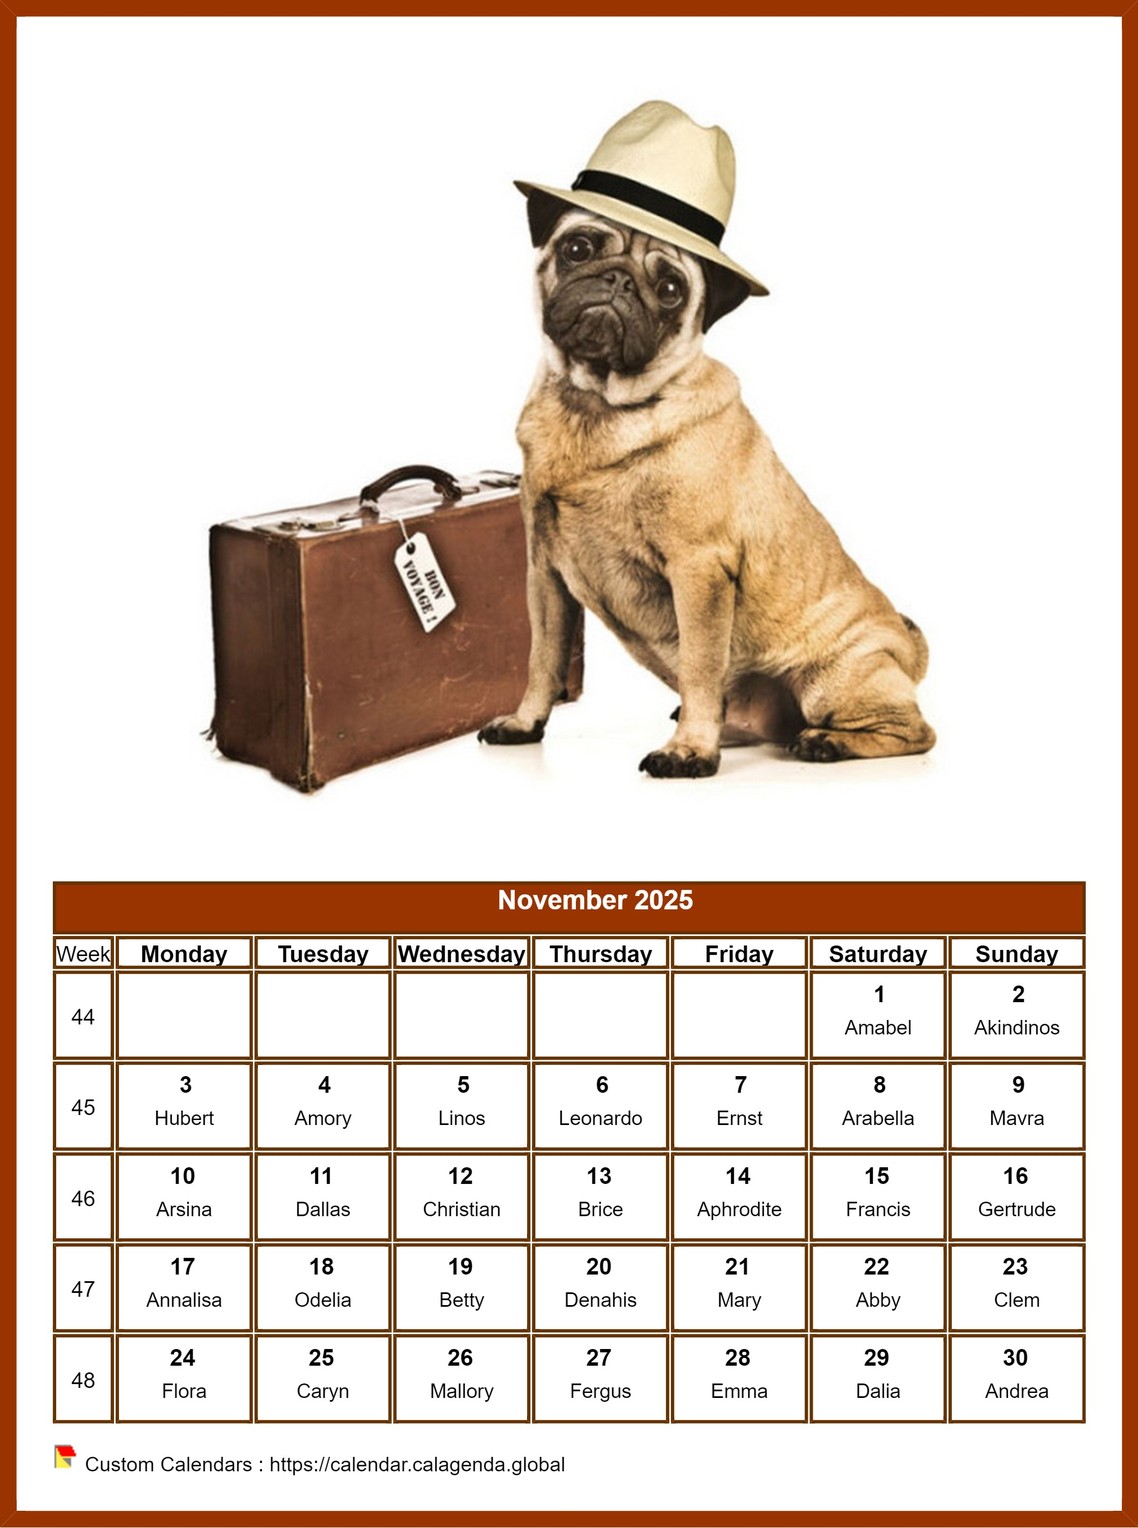 Calendar November 2025 dogs